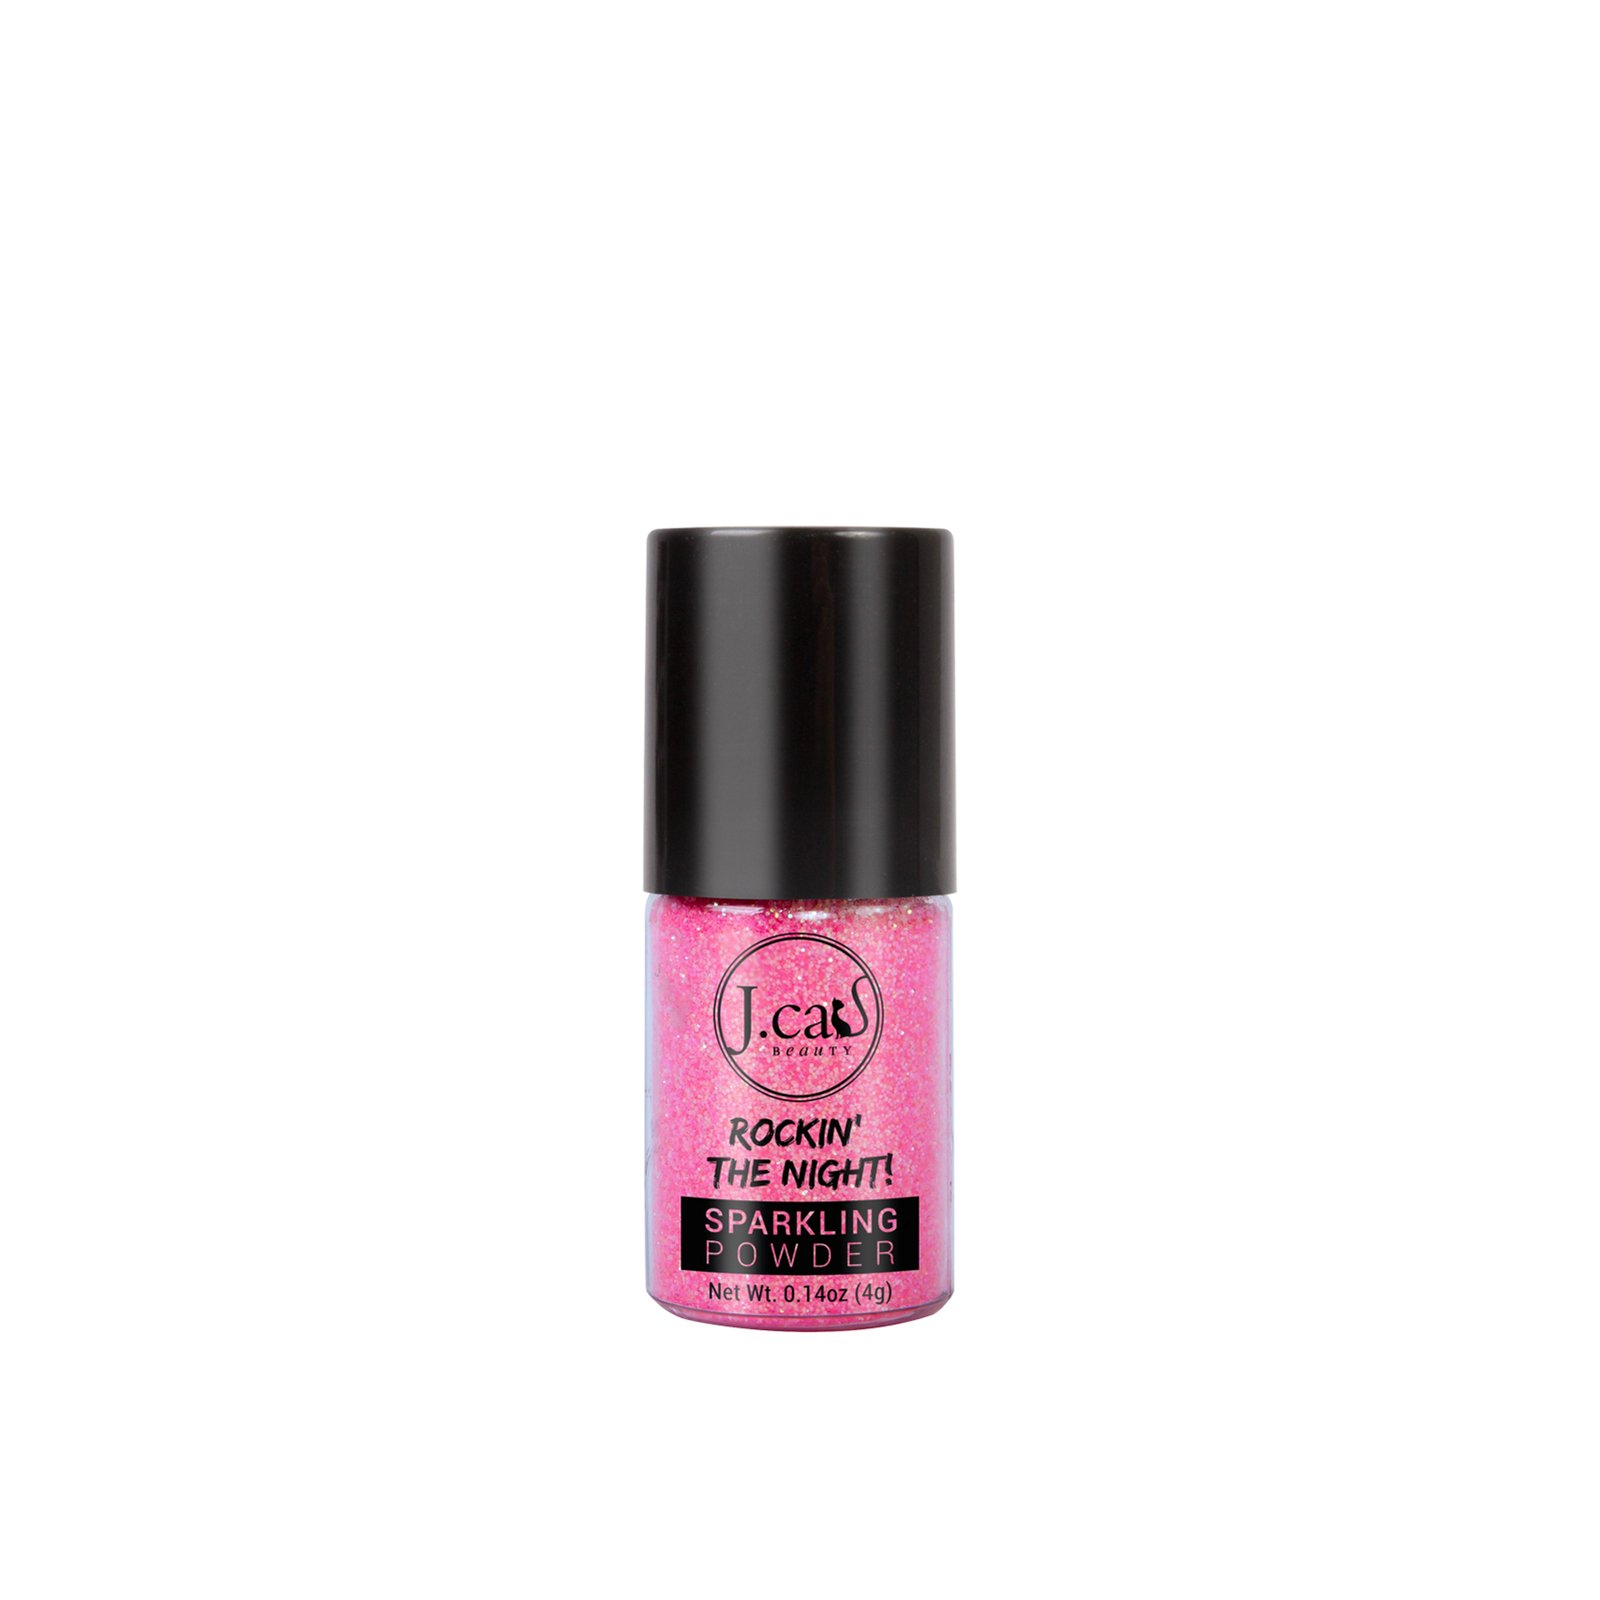 J.Cat Rockin' The Night! Sparkling Powder 209 Ultra Pink 4g (0.14 oz)